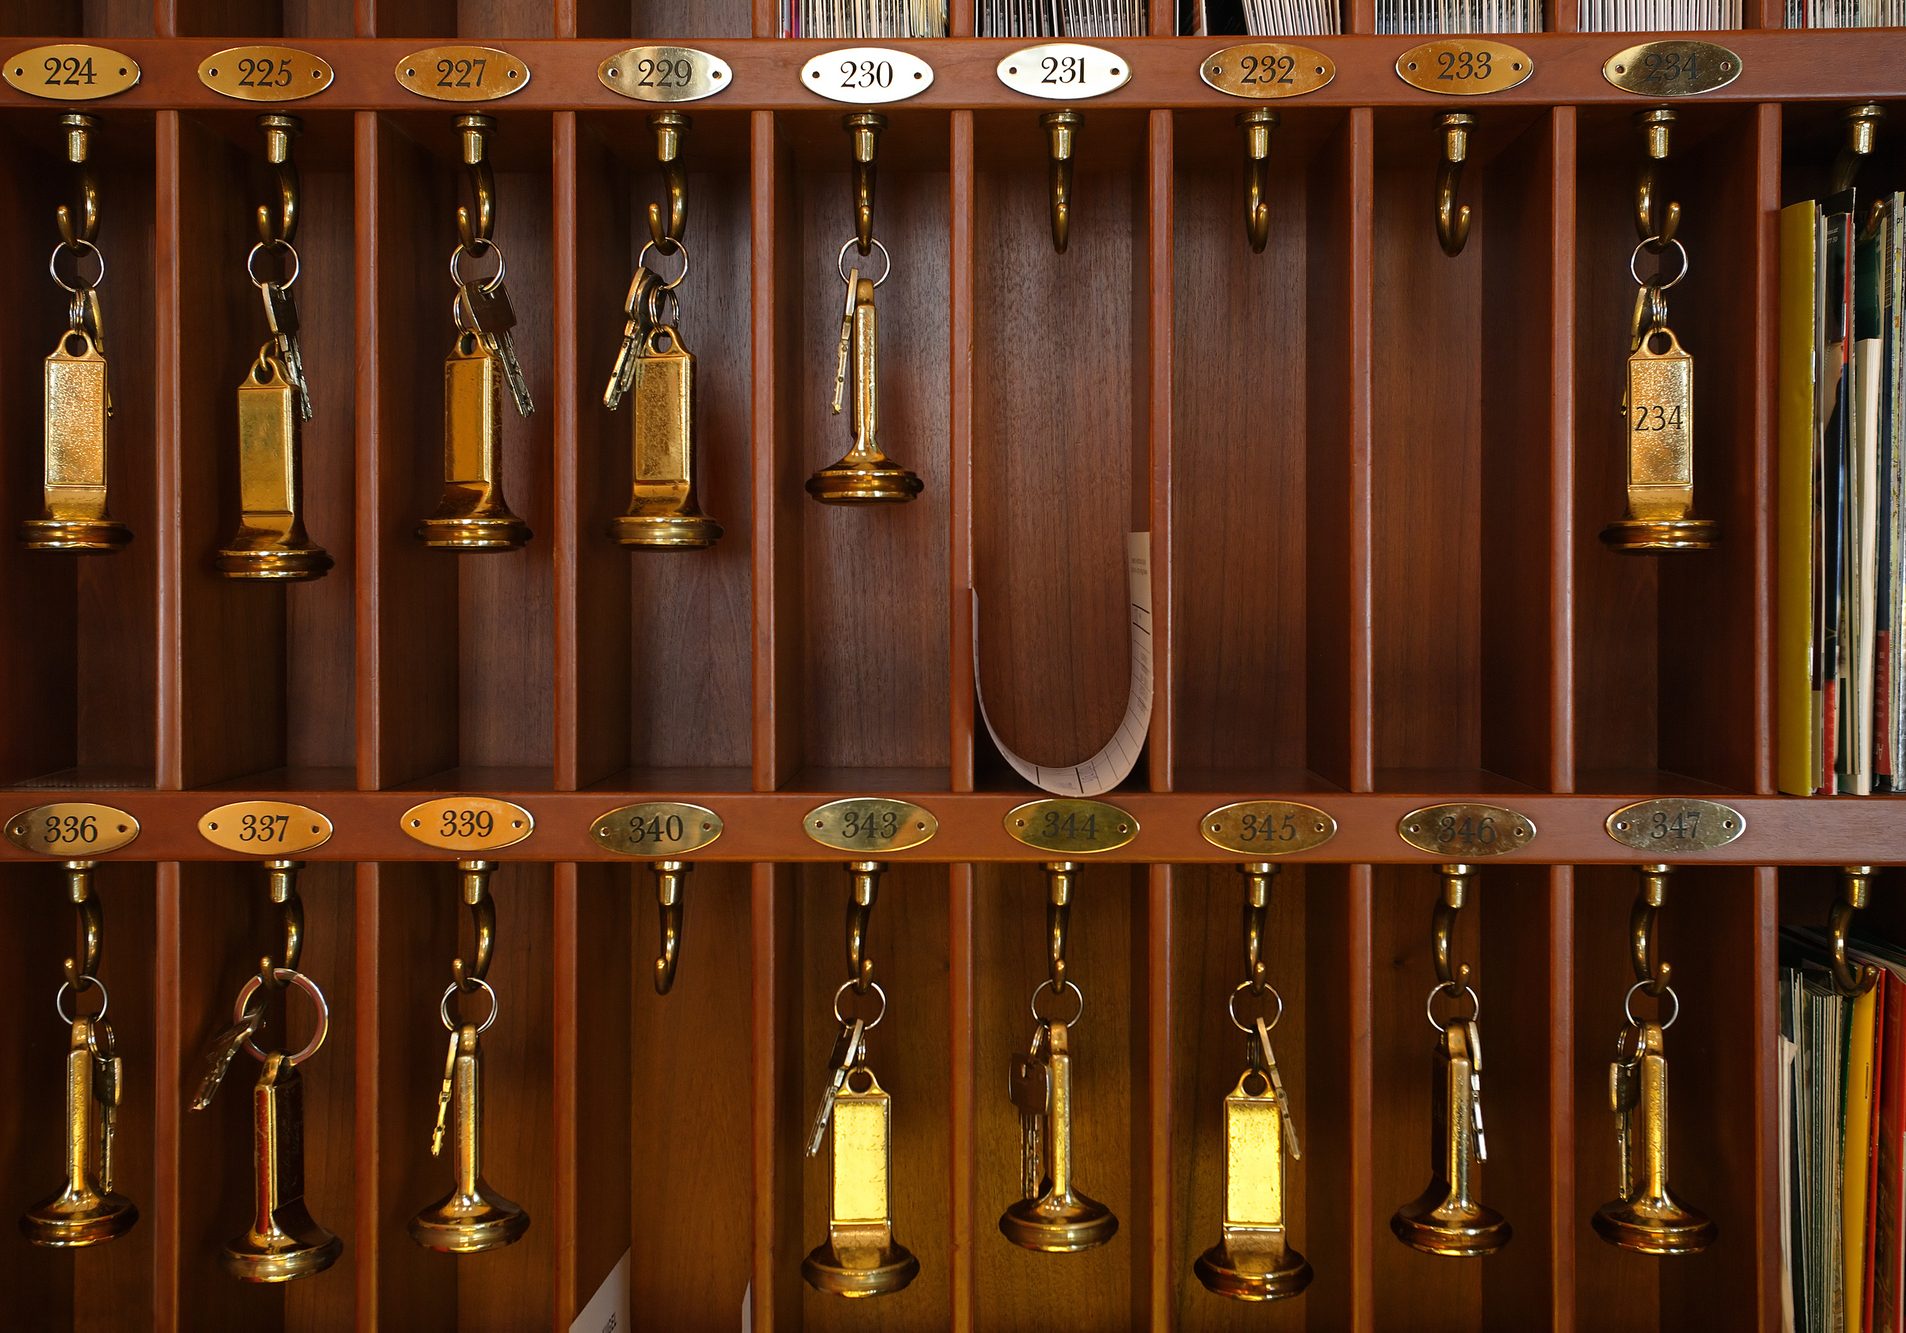 Vintage hotel front desk key rack. Focus on the top row of keys.